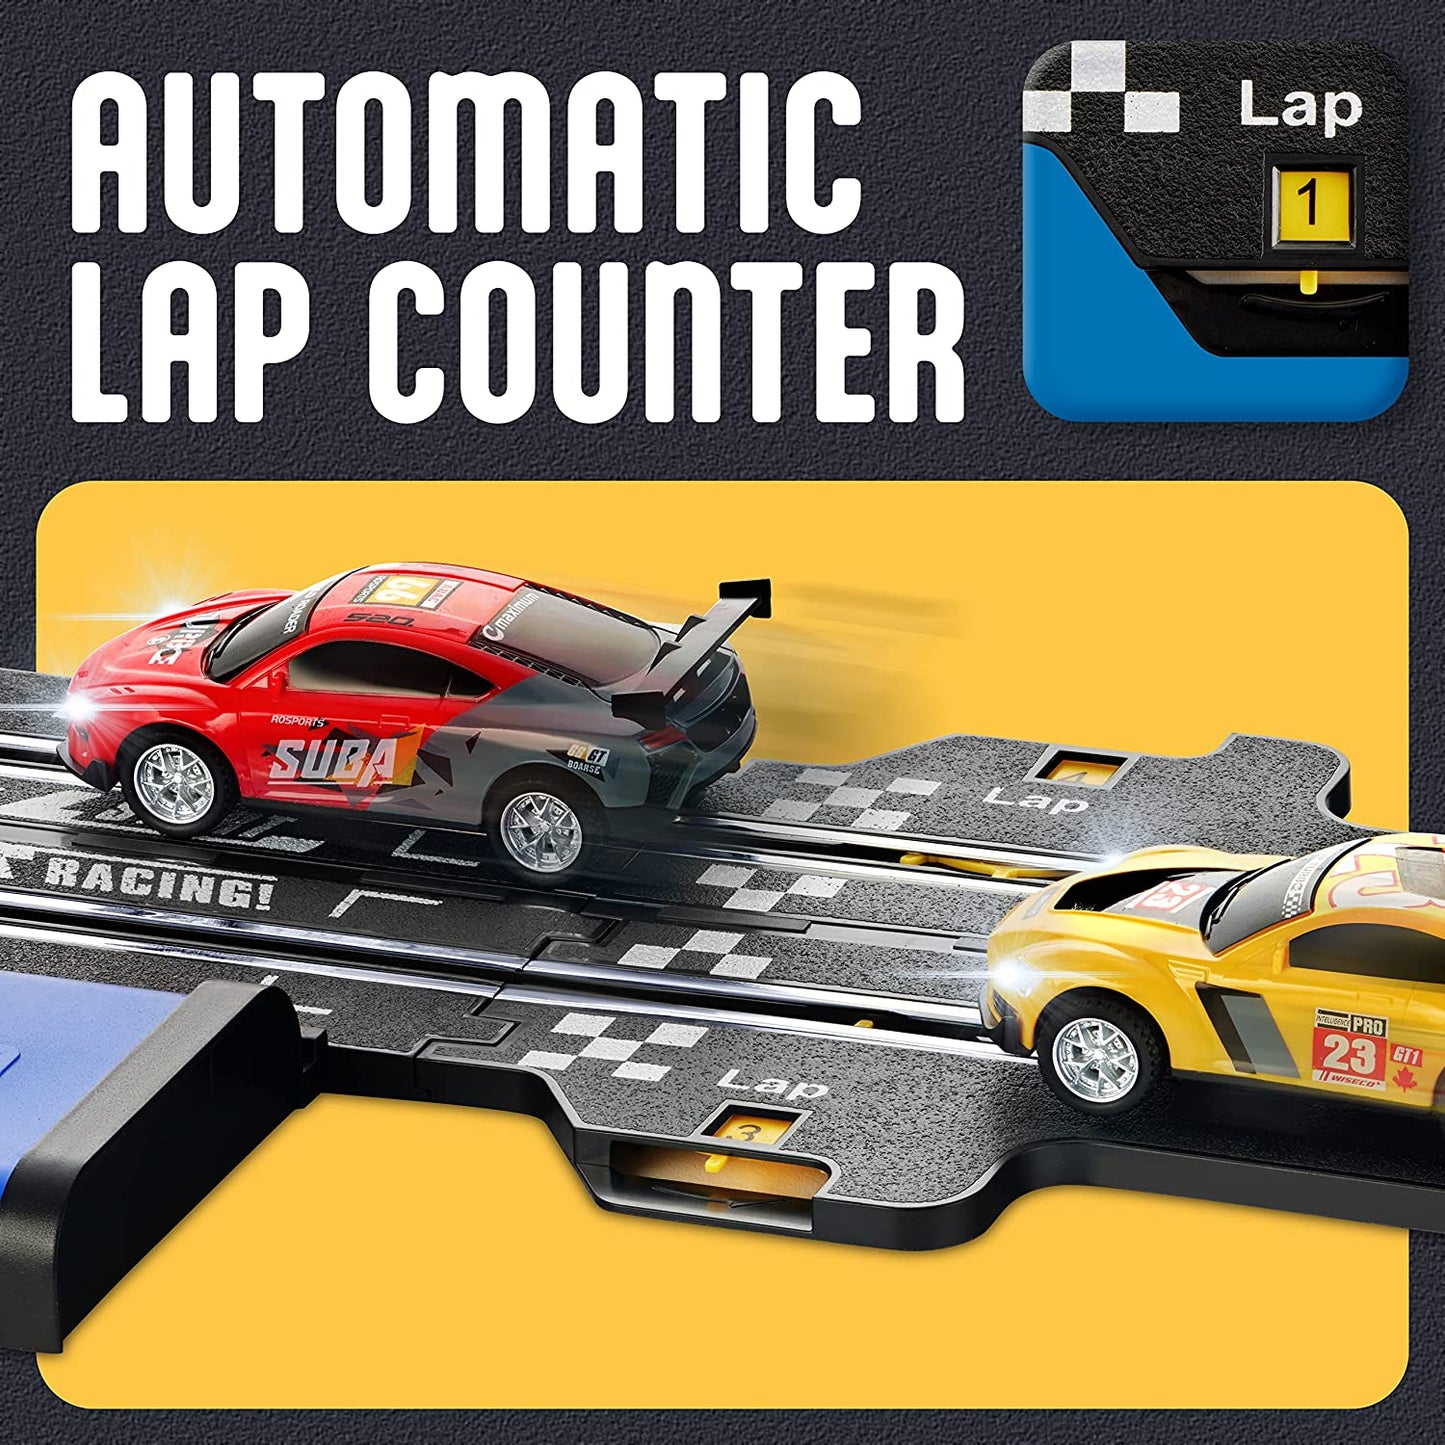 Slot Car Race Track Sets